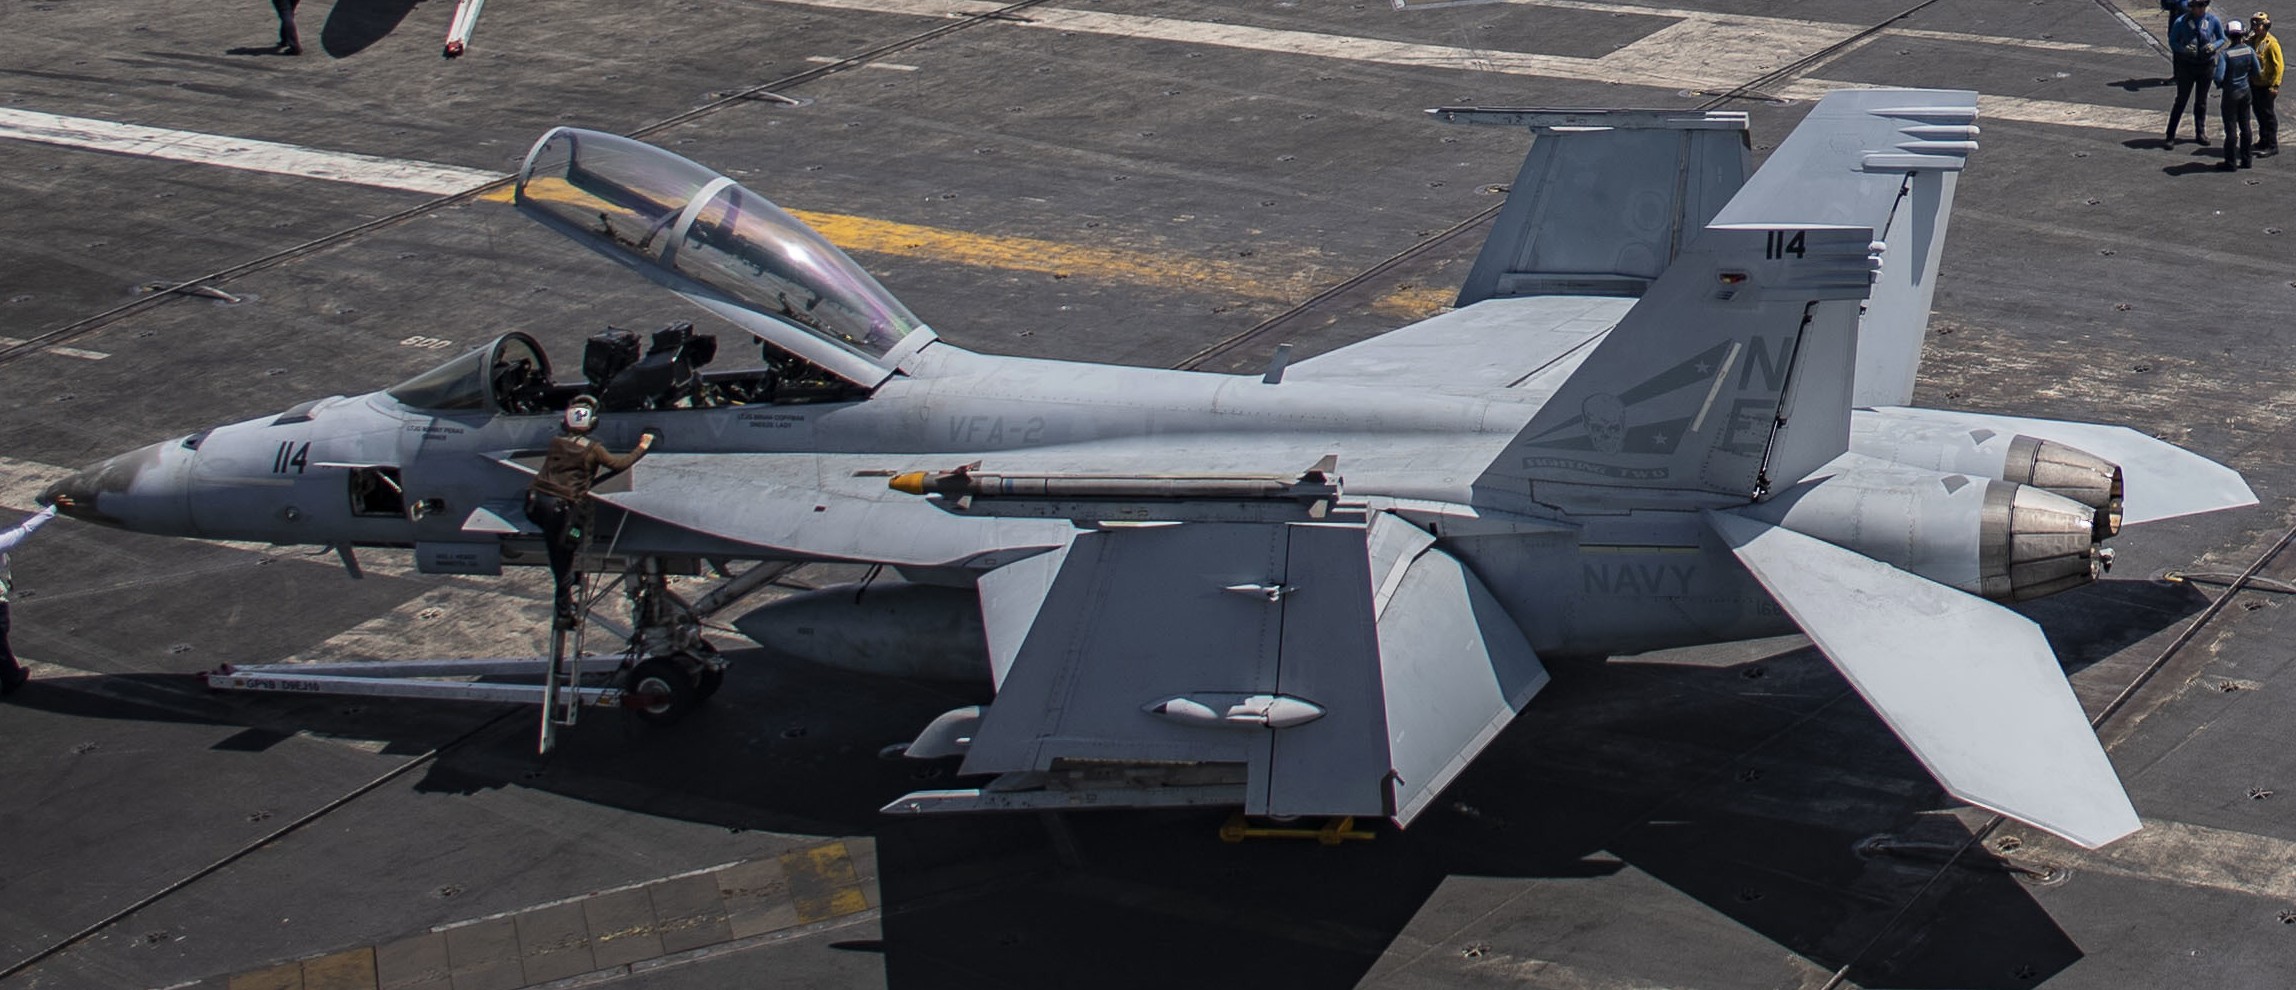 vfa-2 bounty hunters strike fighter squadron us navy f/a-18f super hornet carrier air wing cvw-2 uss carl vinson cvn-70 75